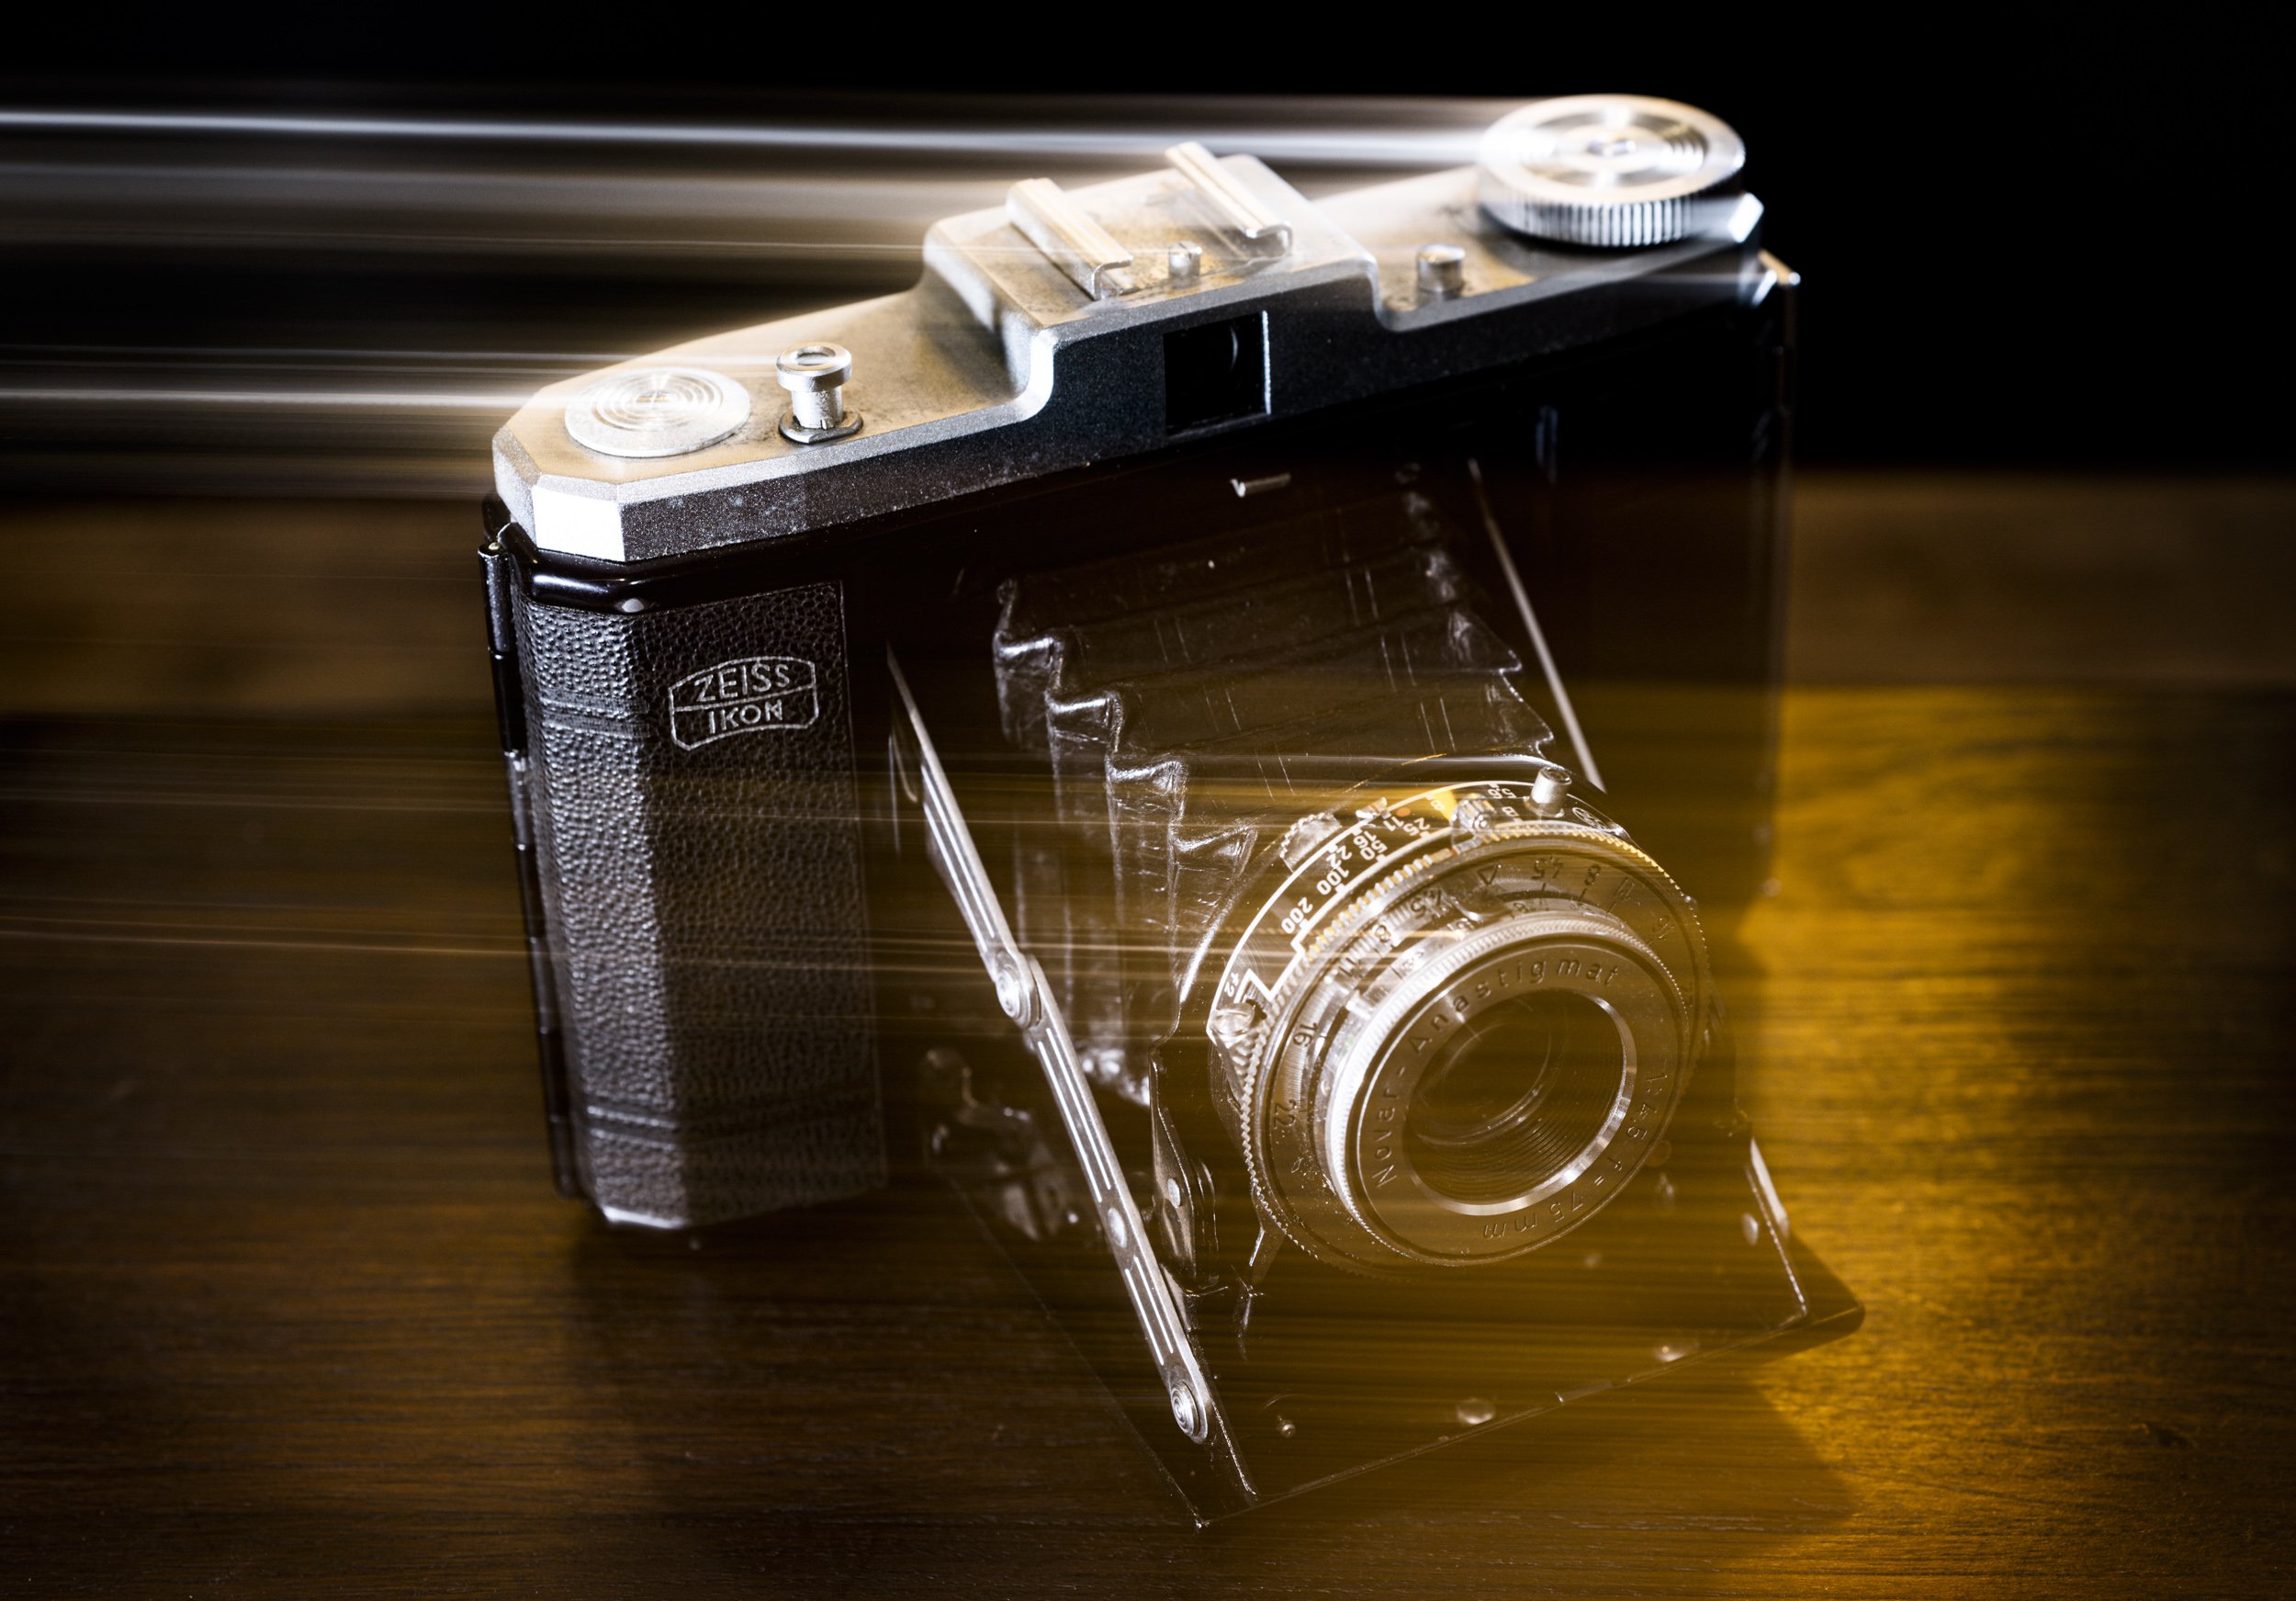 Zeis camera with blur © Kevin Landwer-Johan